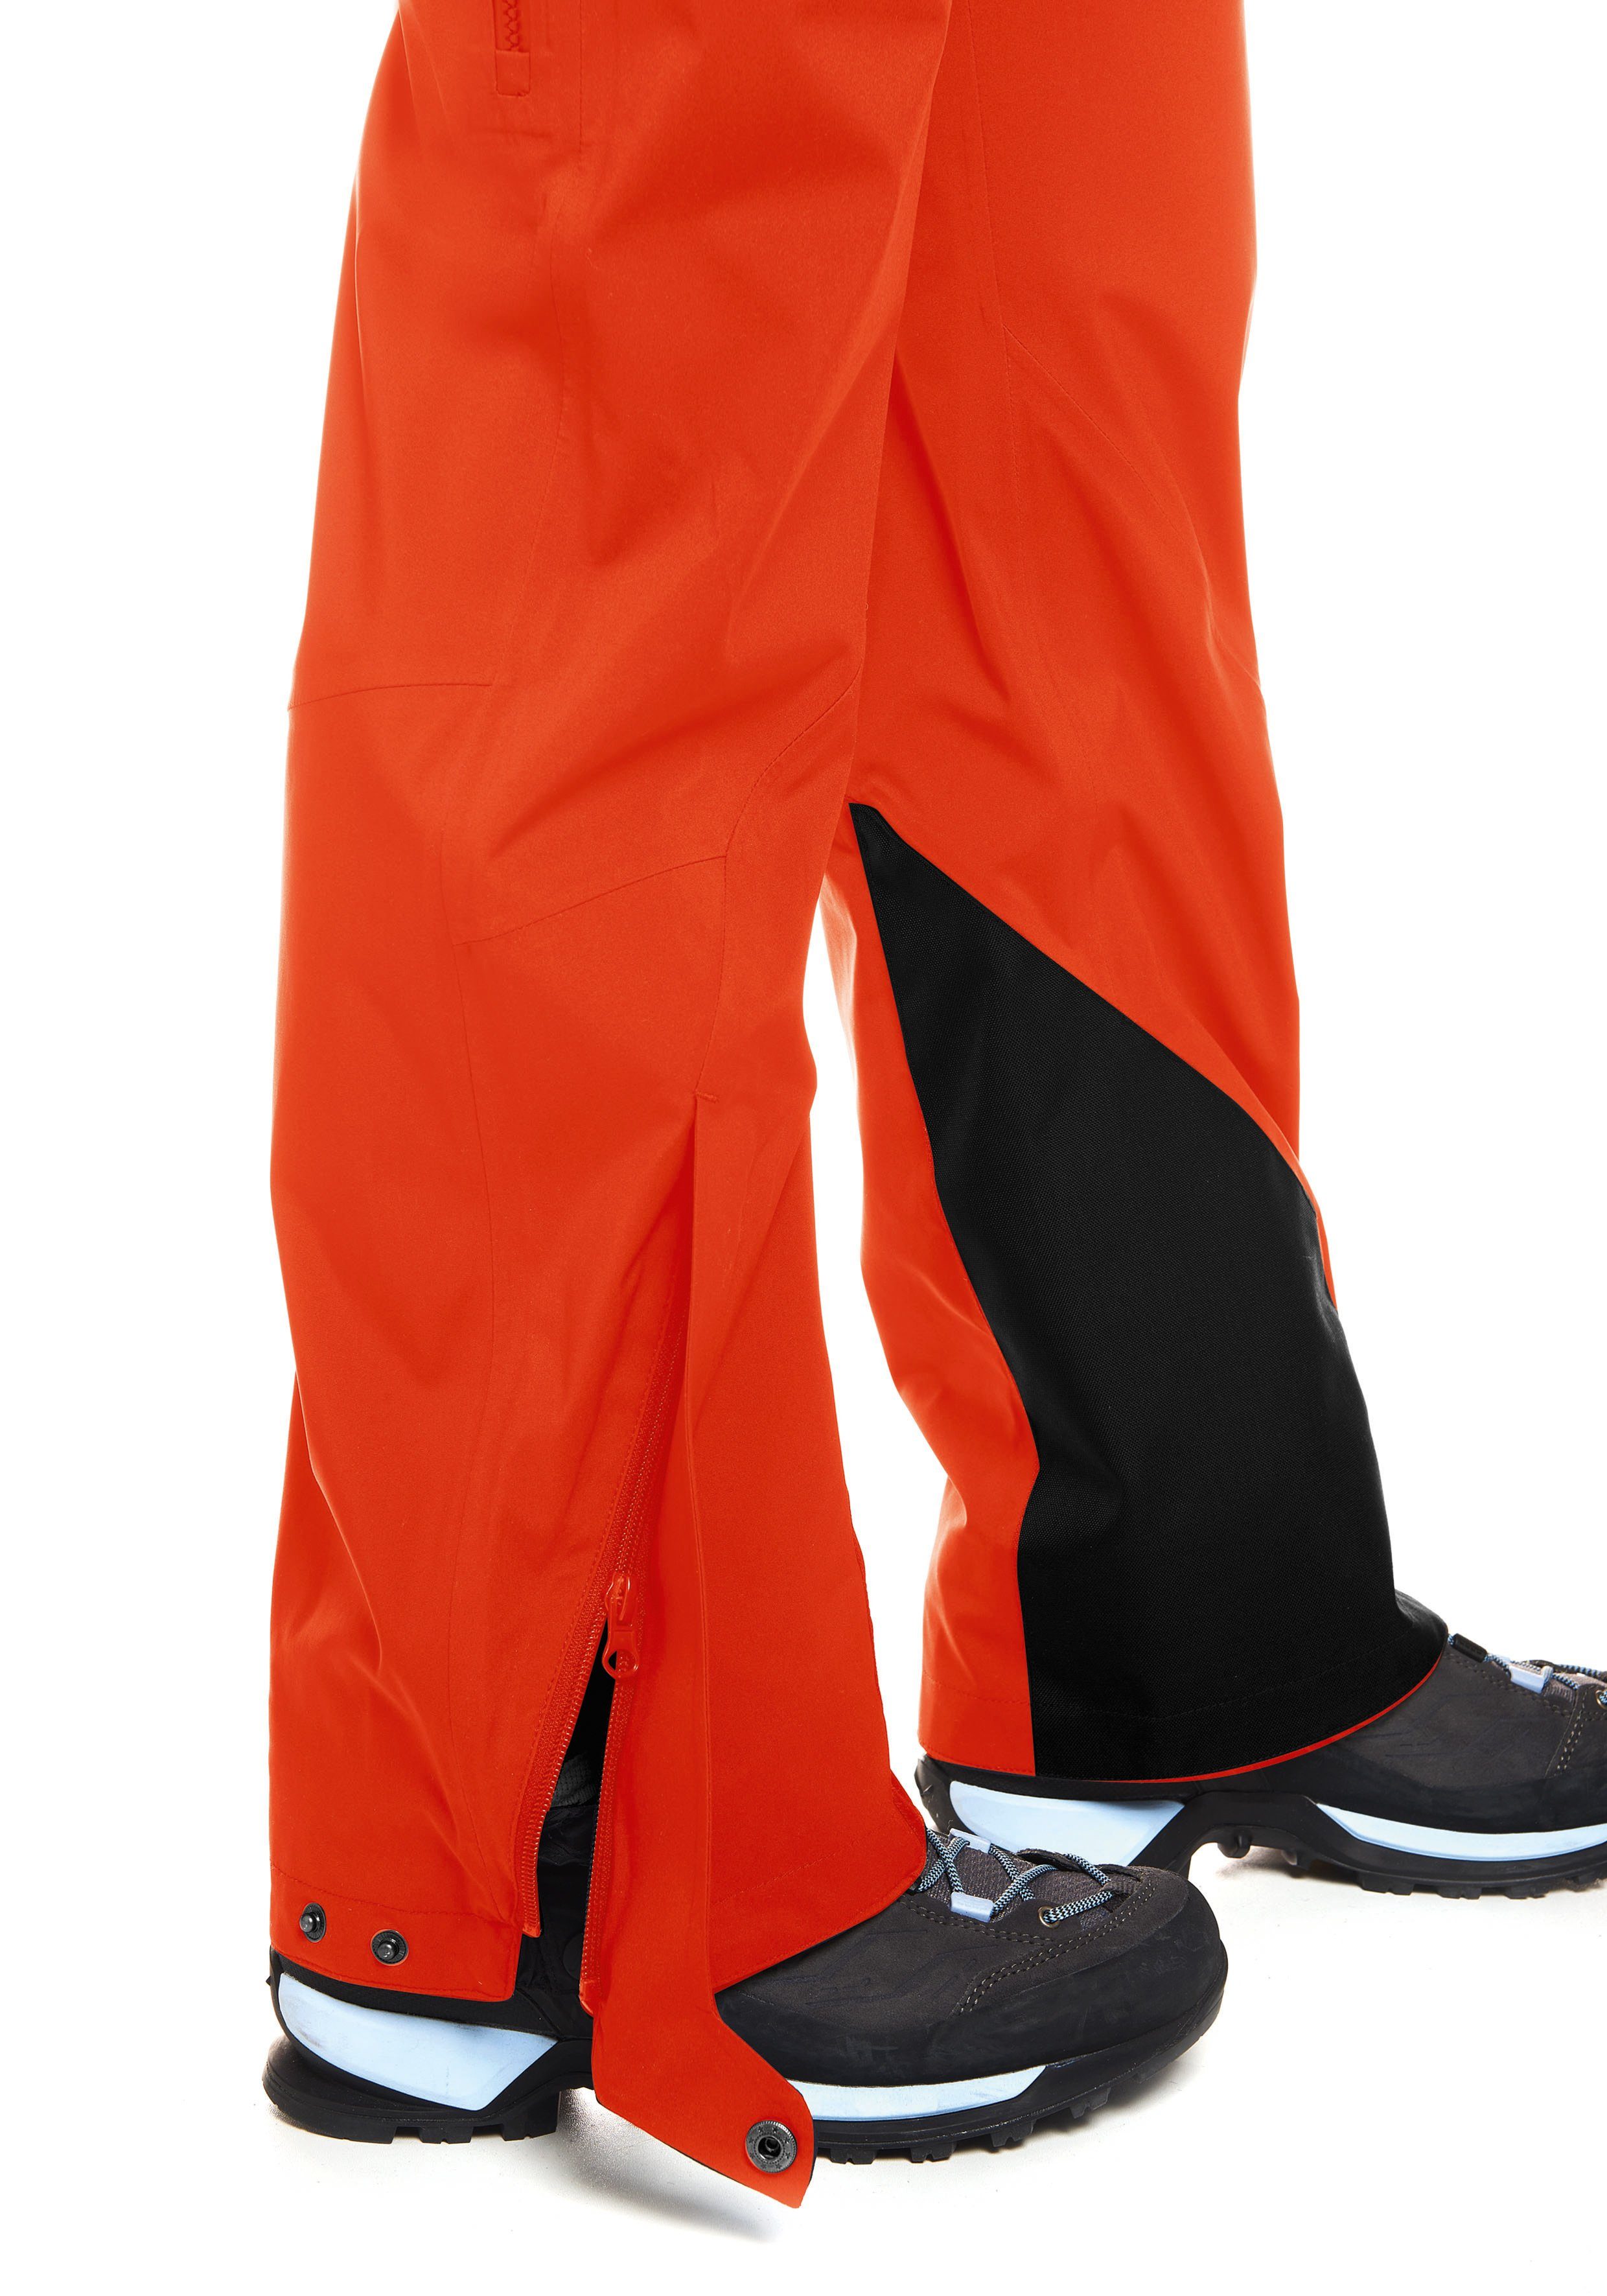 Outdoor-Aktivitäten knallrot Robuste Pants P3 Funktionshose Maier W Liland 3-Lagen-Hose für anspruchsvolle Sports